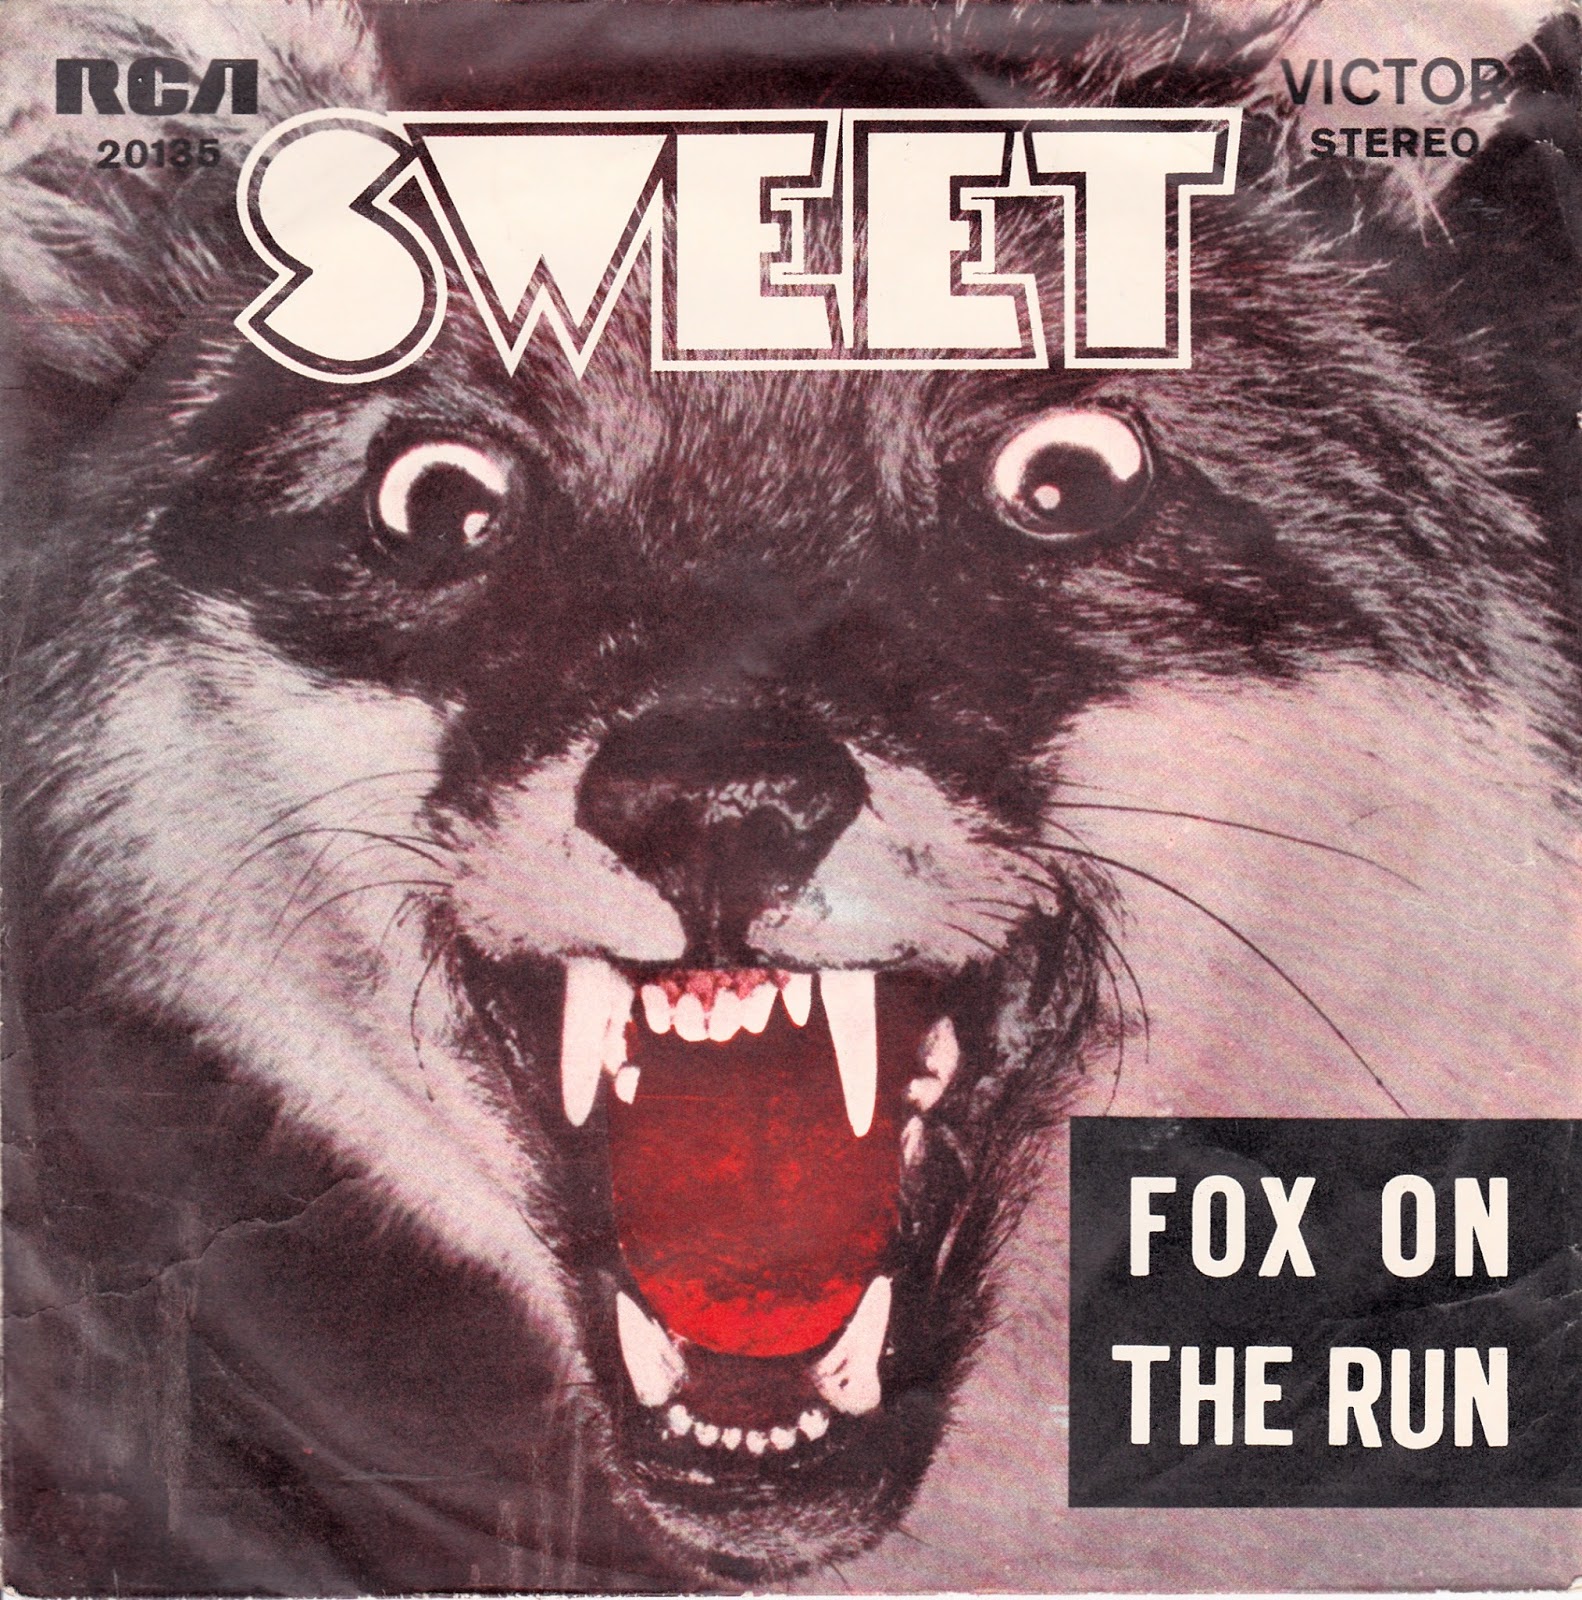 Fox on the run. Fox on the Run группы the Sweet.. Fox on the Run-1975 Sweet. Fox on the Run Sweet обложка альбома. LP Sweet: Fox on the Run.